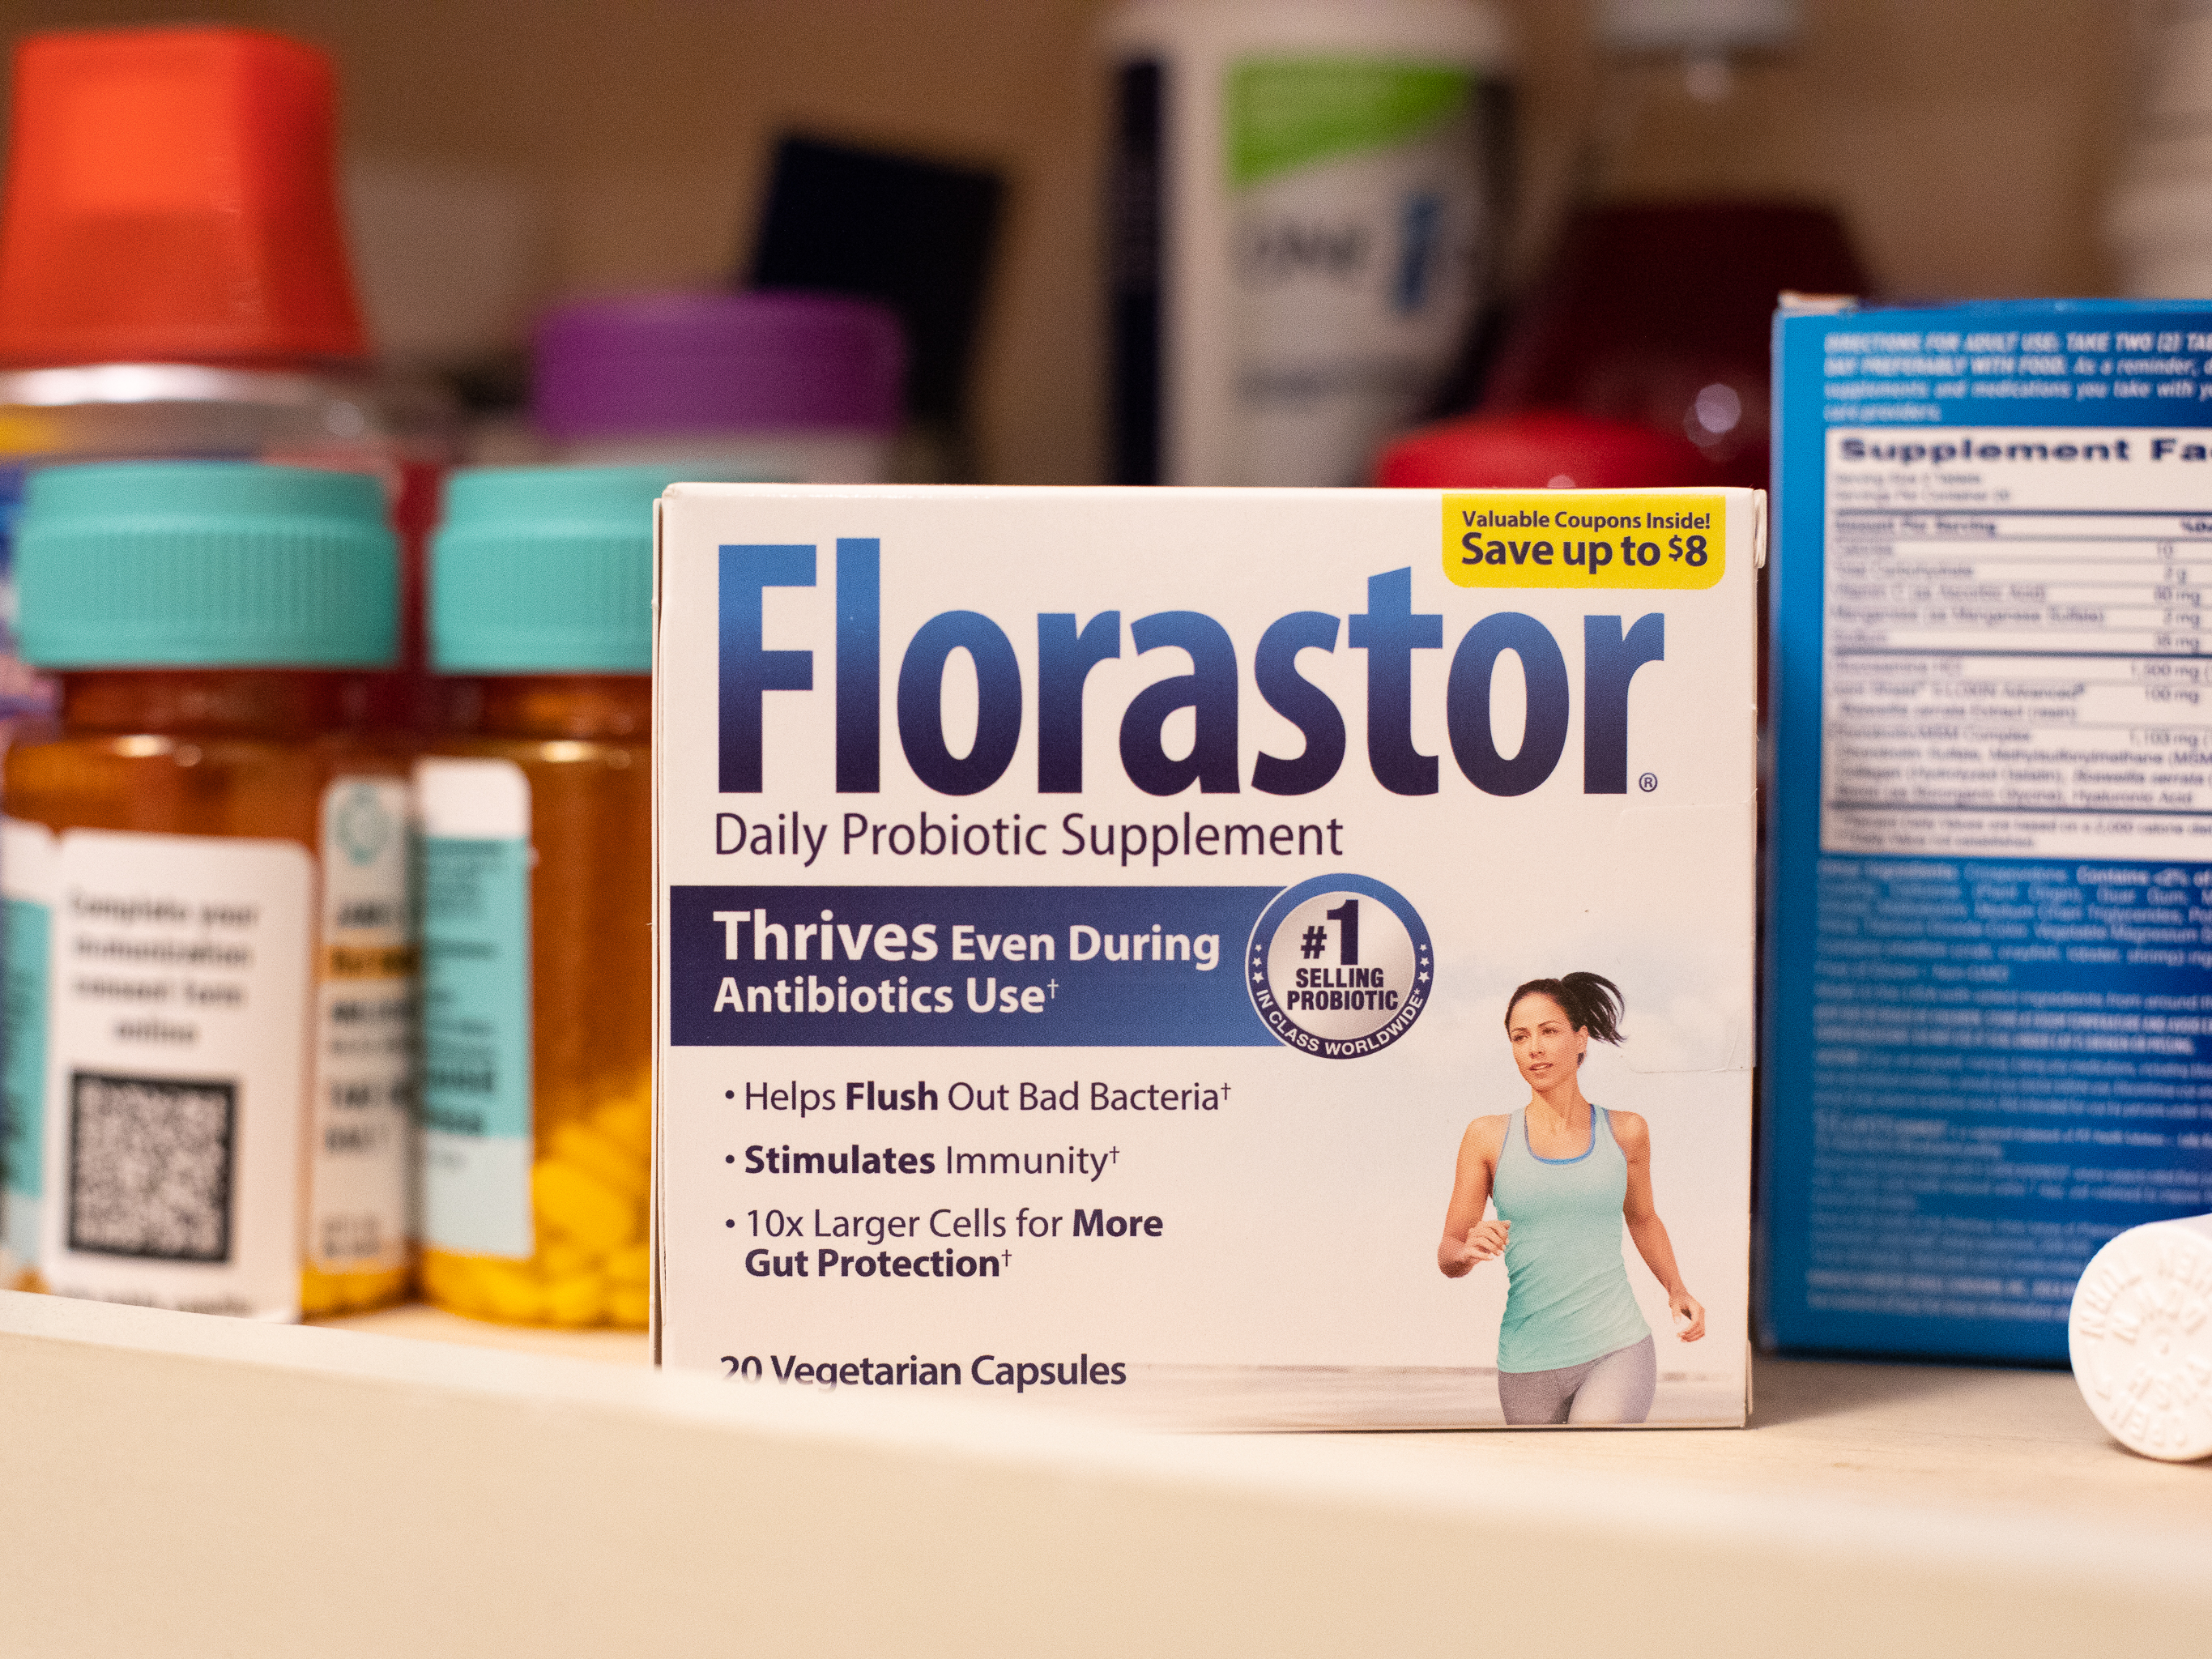 Florastor Probiotic Supplement As Low As $6.99 At Publix (Regular Price $19.99)